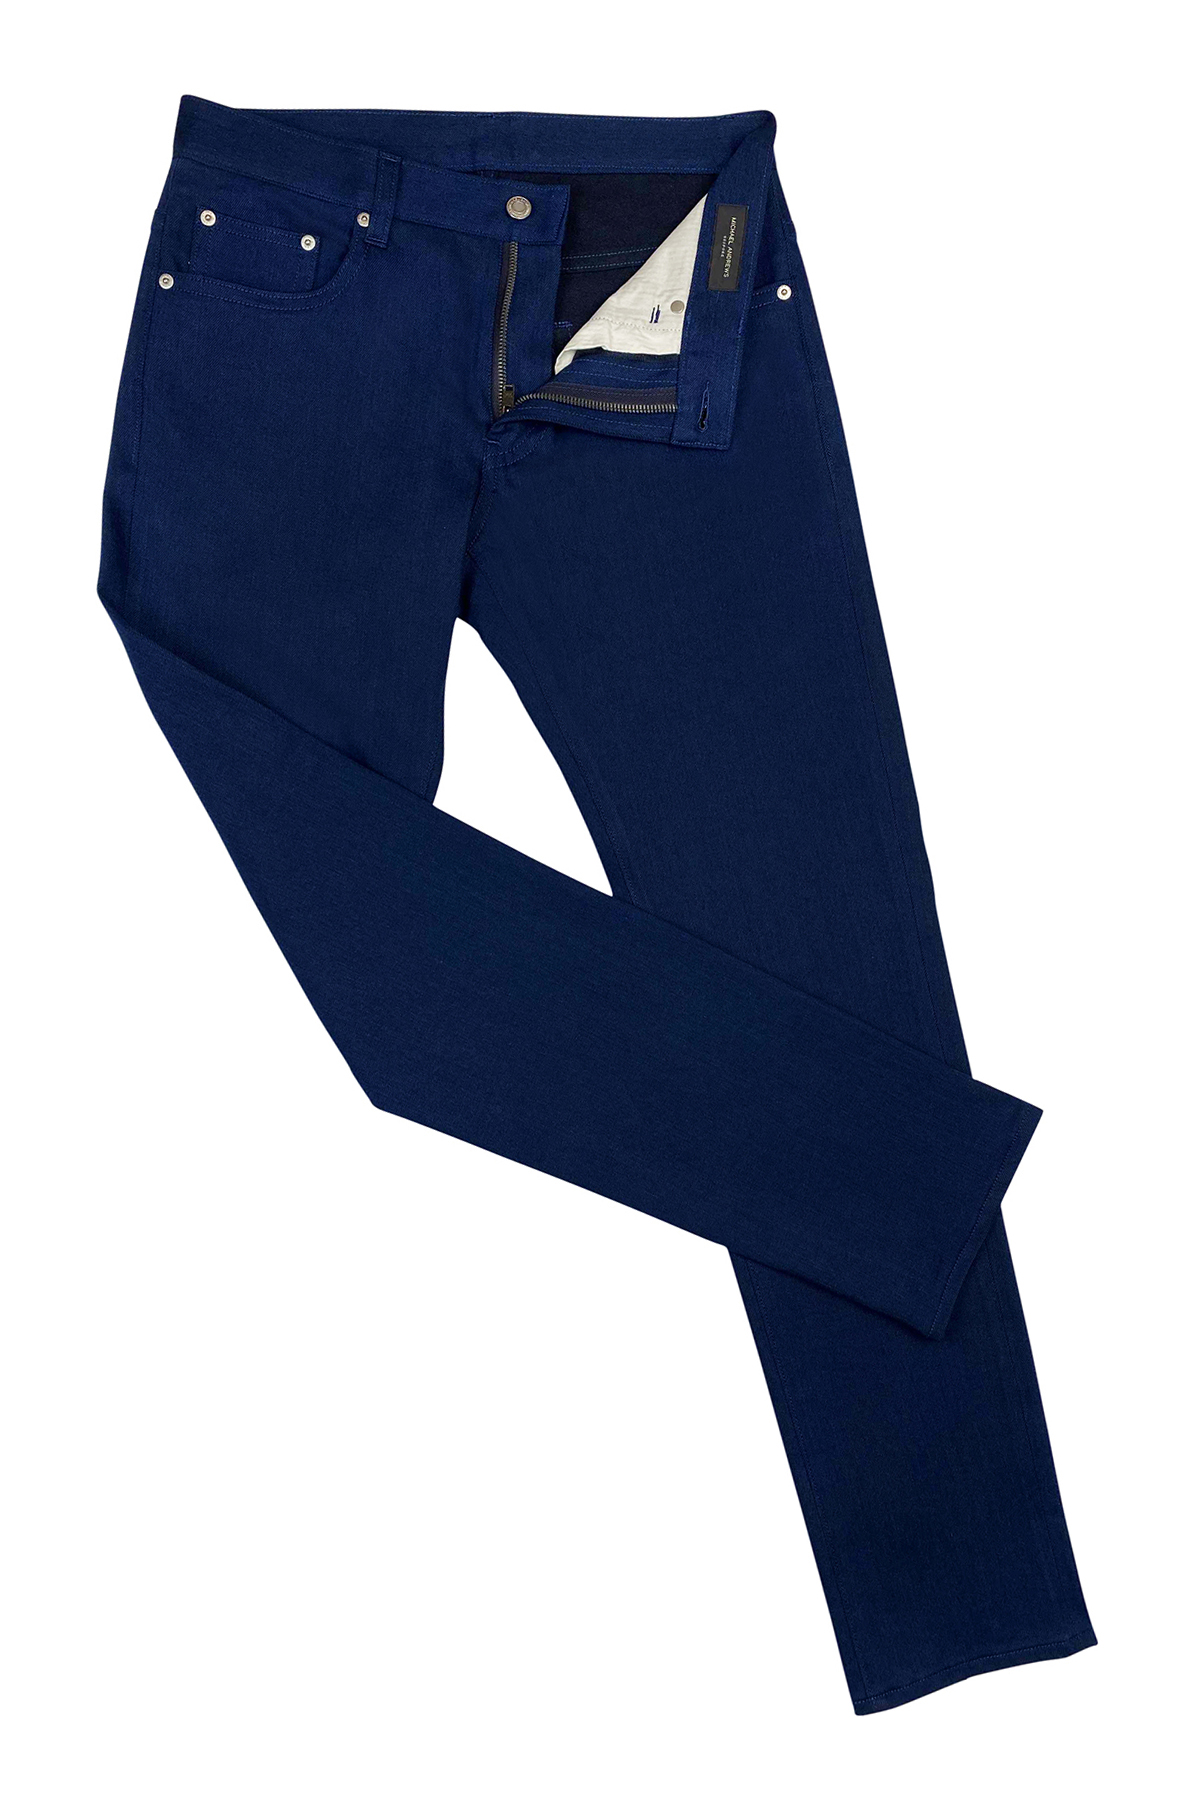 Royal Blue Stretch Denim Jeans